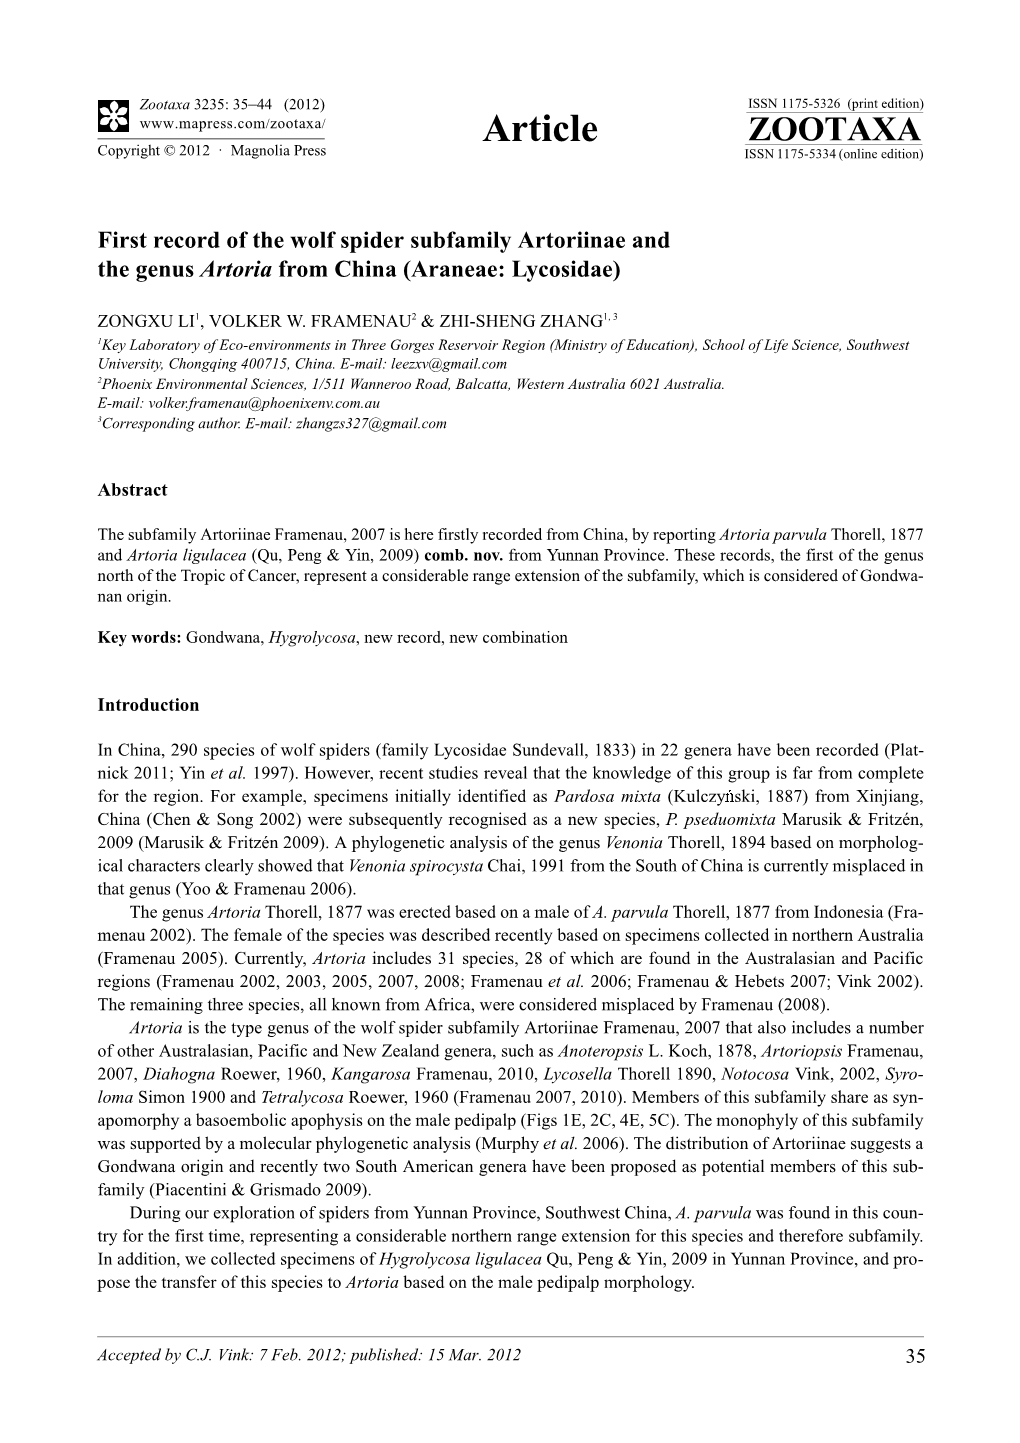 First Record of the Wolf Spider Subfamily Artoriinae and the Genus Artoria from China (Araneae: Lycosidae)